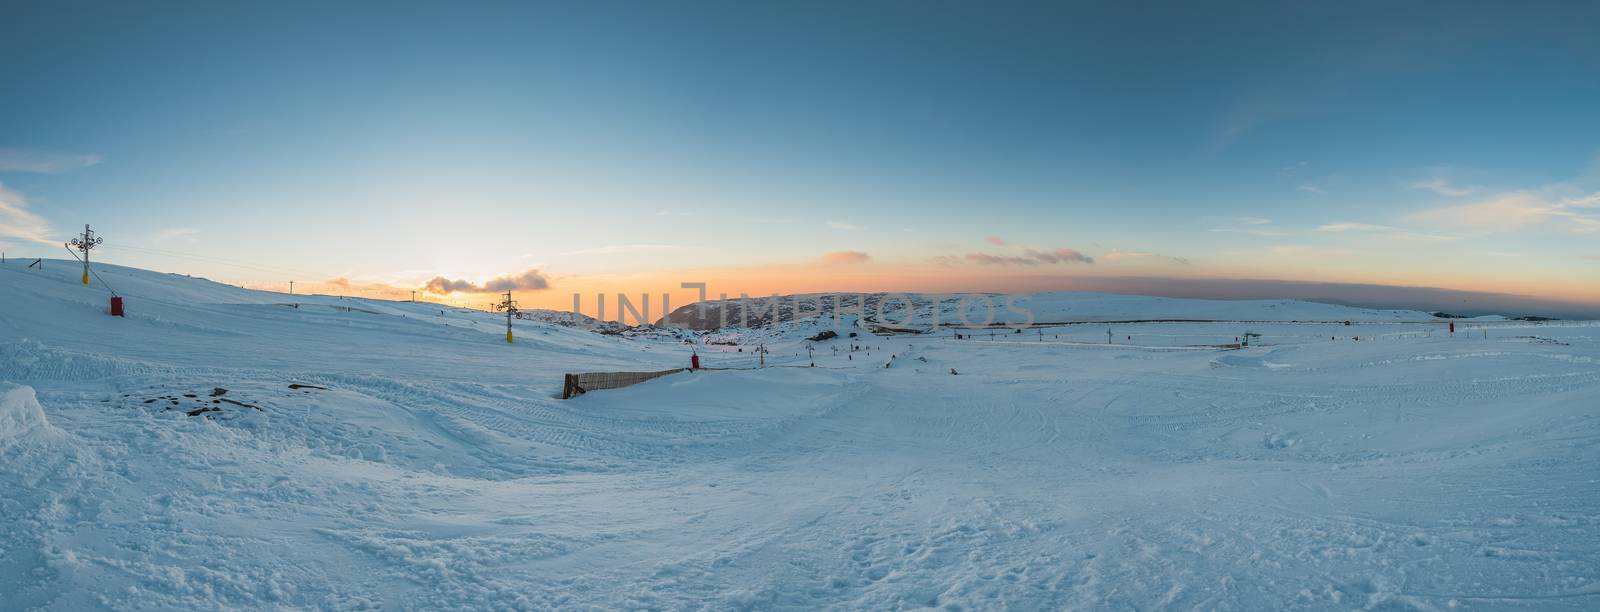 Panoramic view of the Ski Resort during sunset at Serra da Estre by homydesign